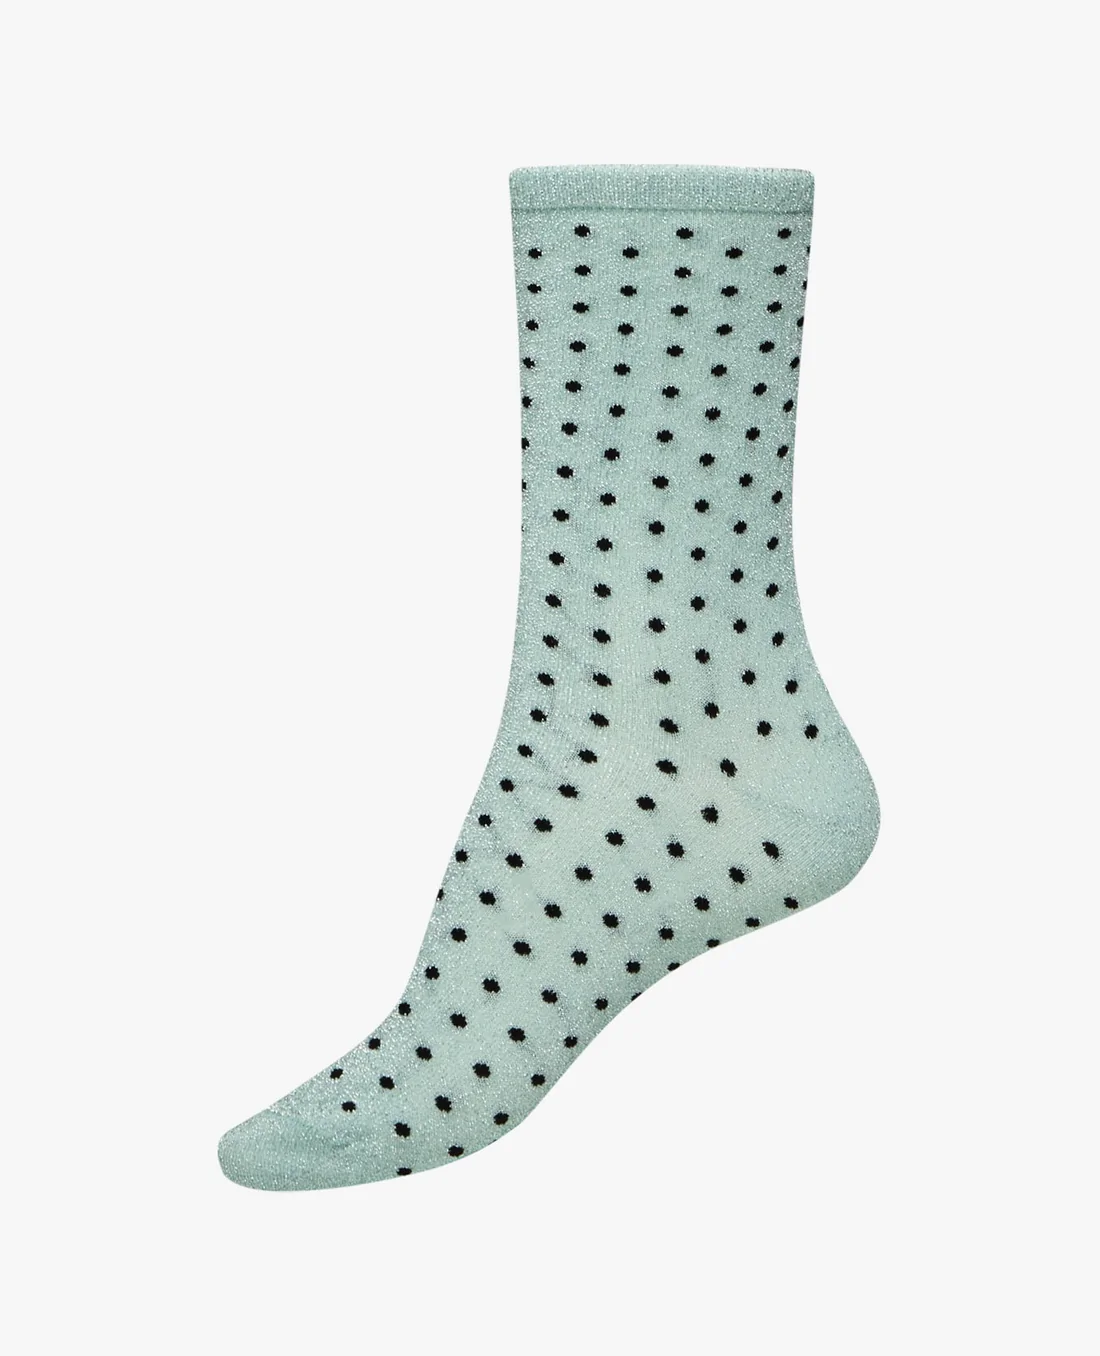 Unmade Copenhagen  MOONLIGHT glitter socks / women